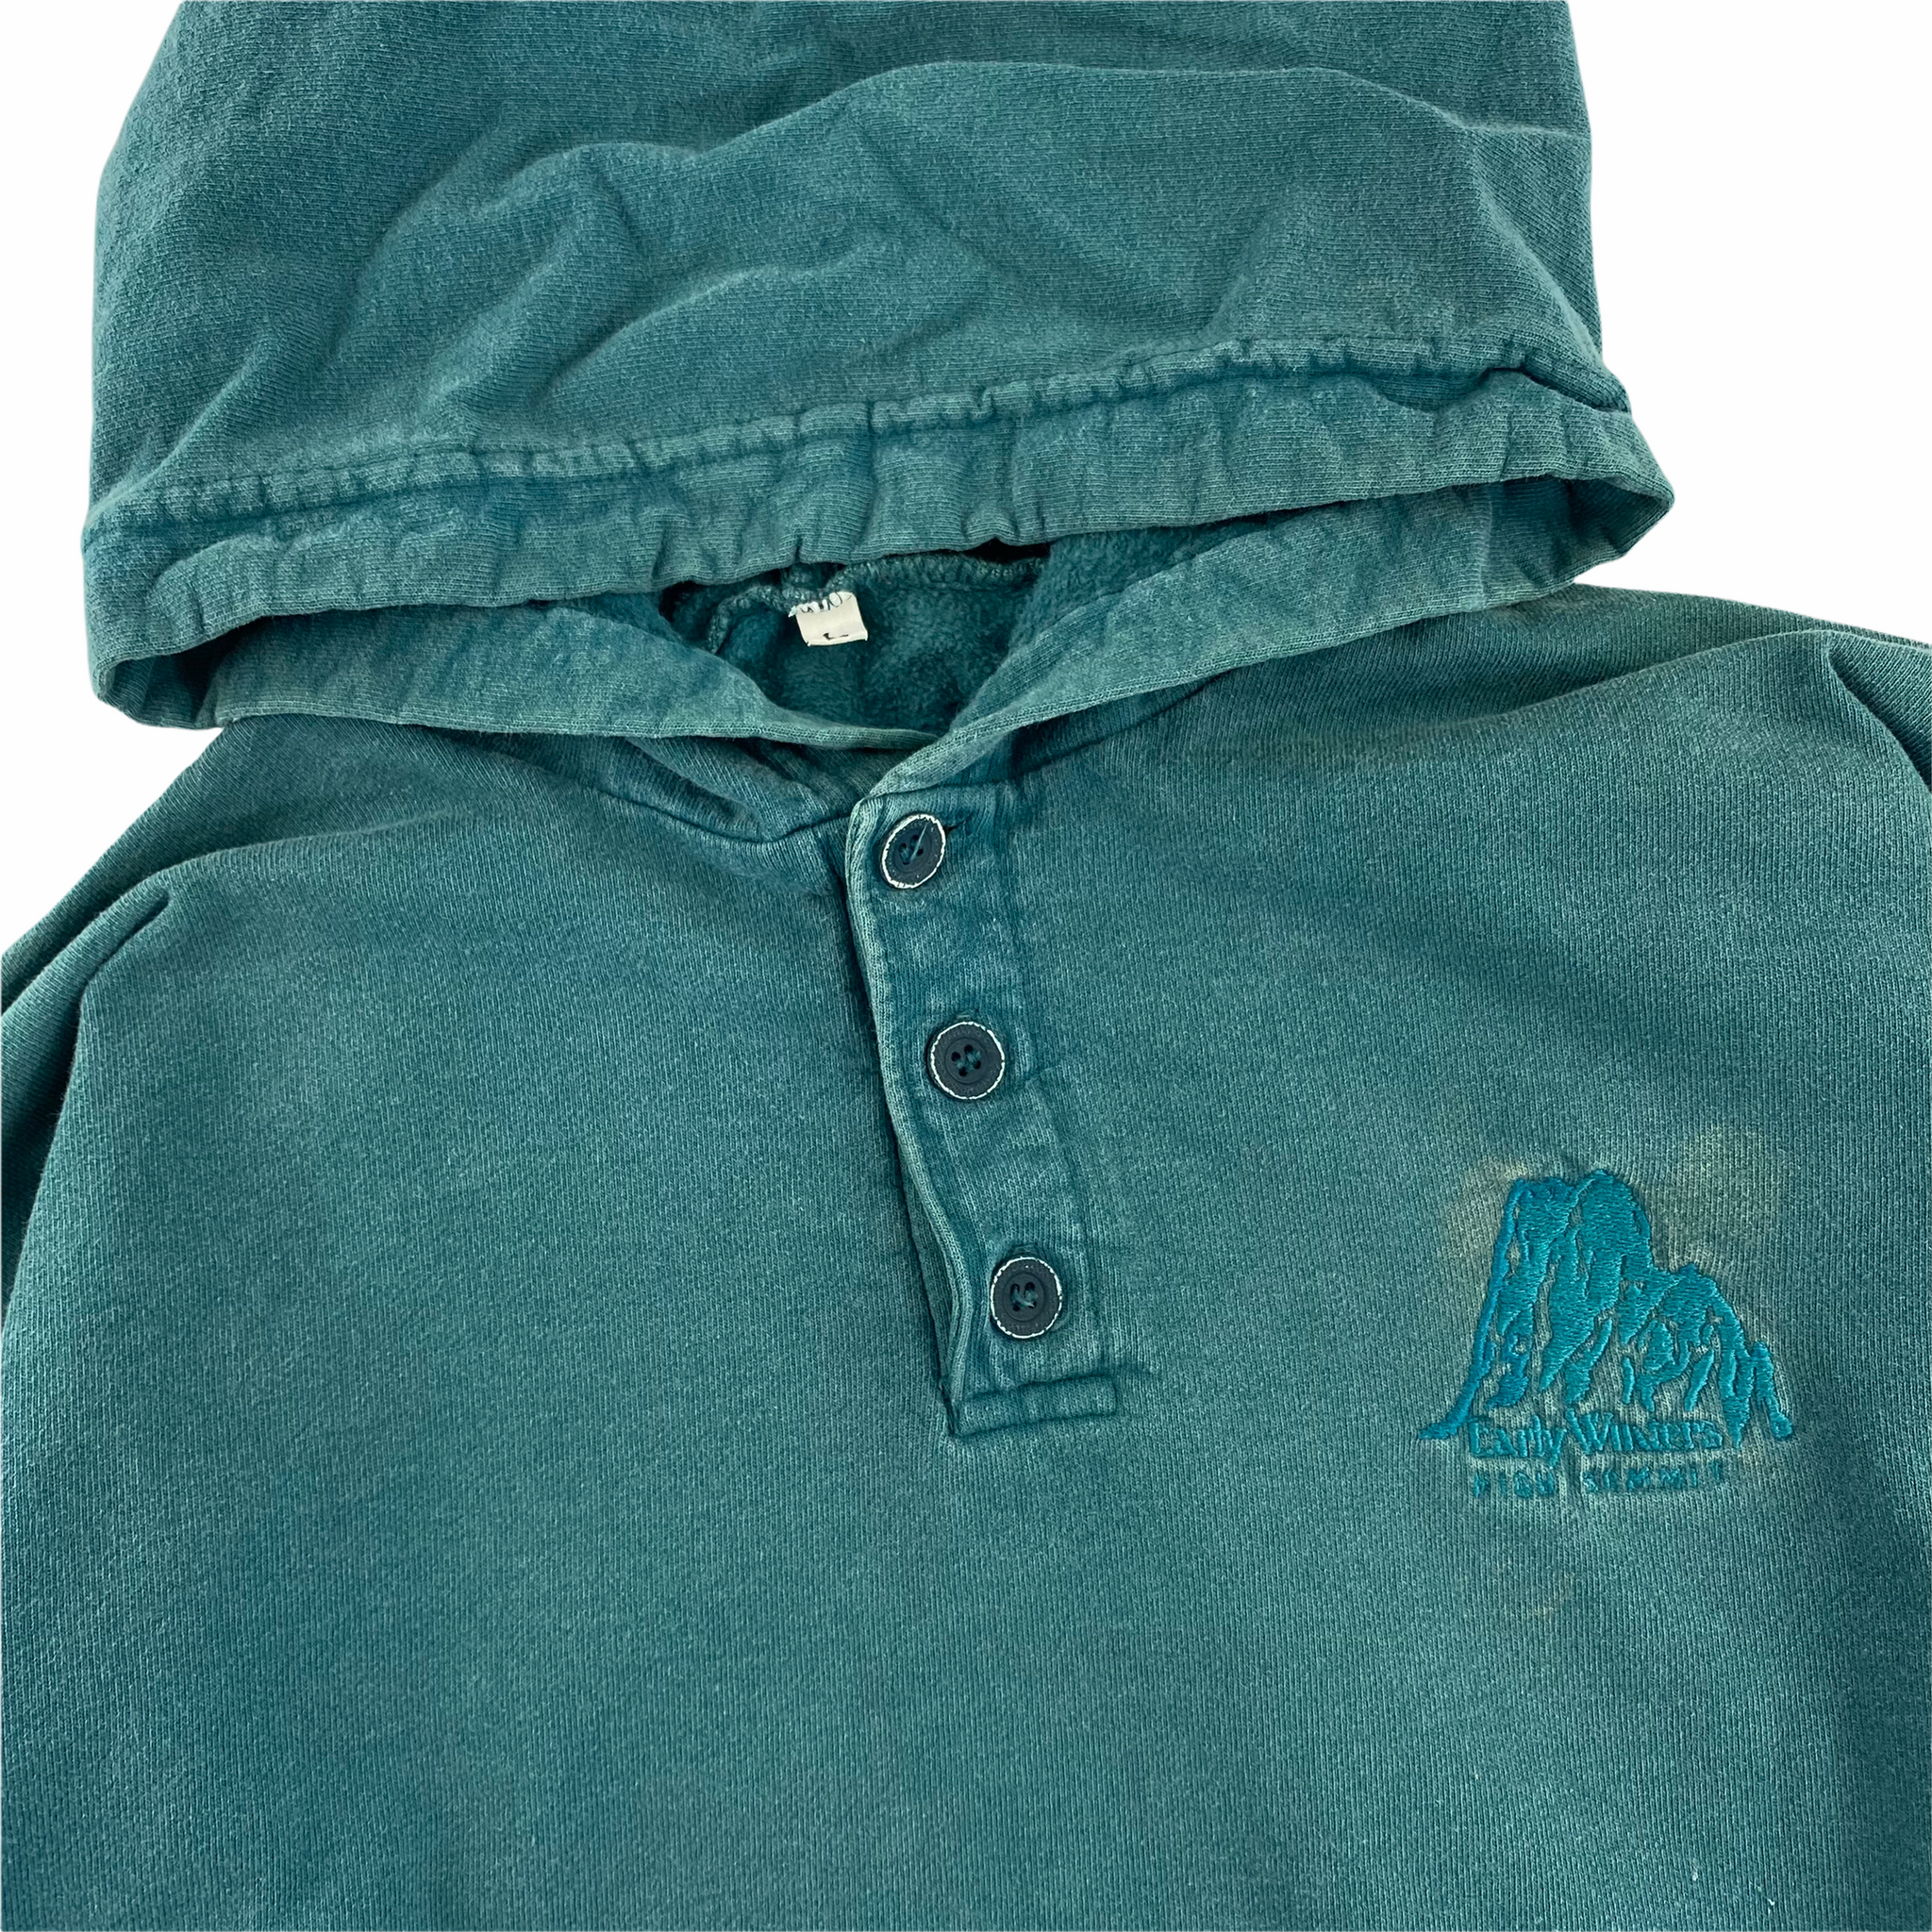 80s Early winters hooded sweatshirt. 100% cotton.  Large